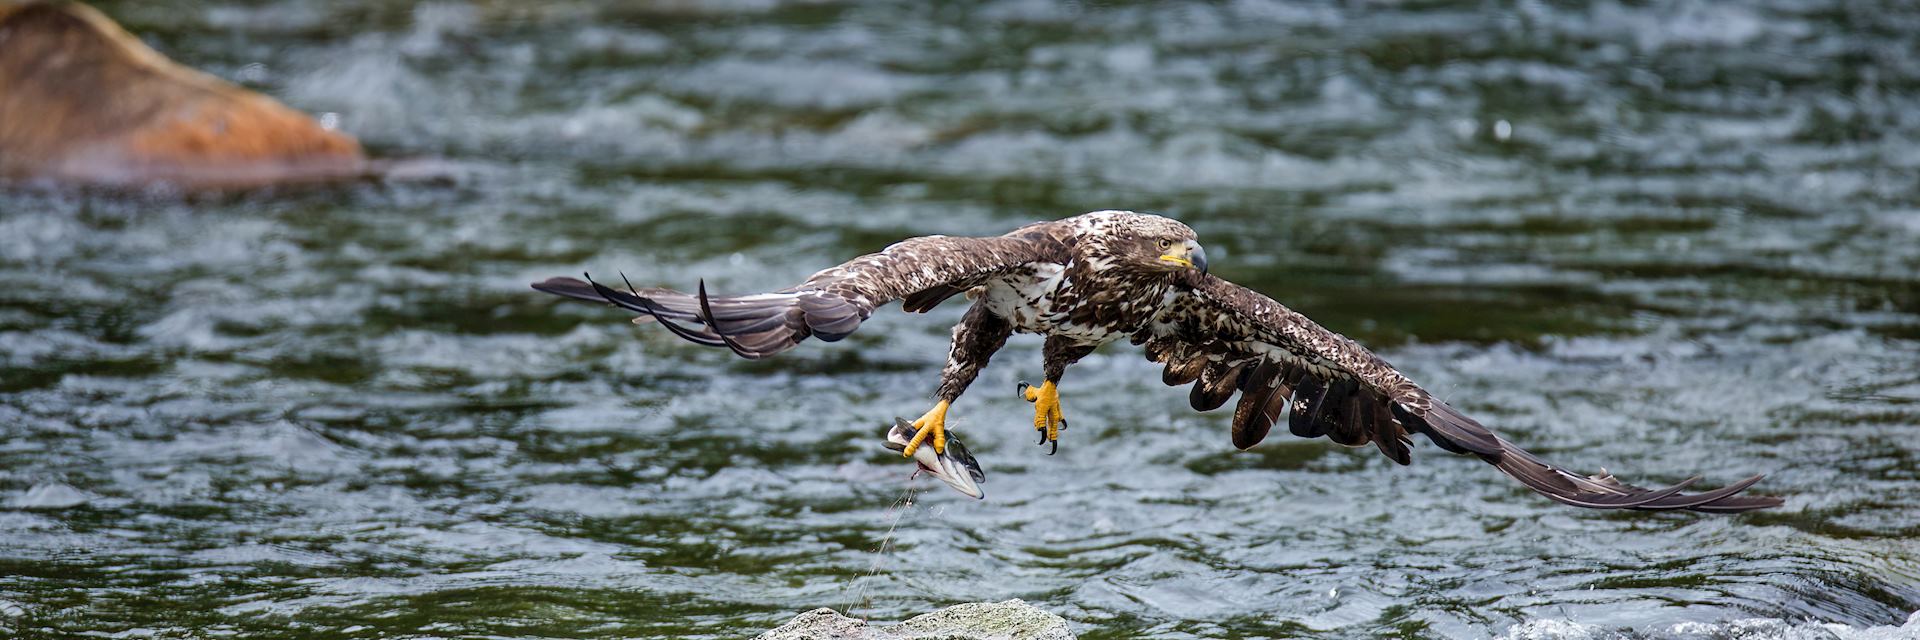 Eagle in Katmai National Park